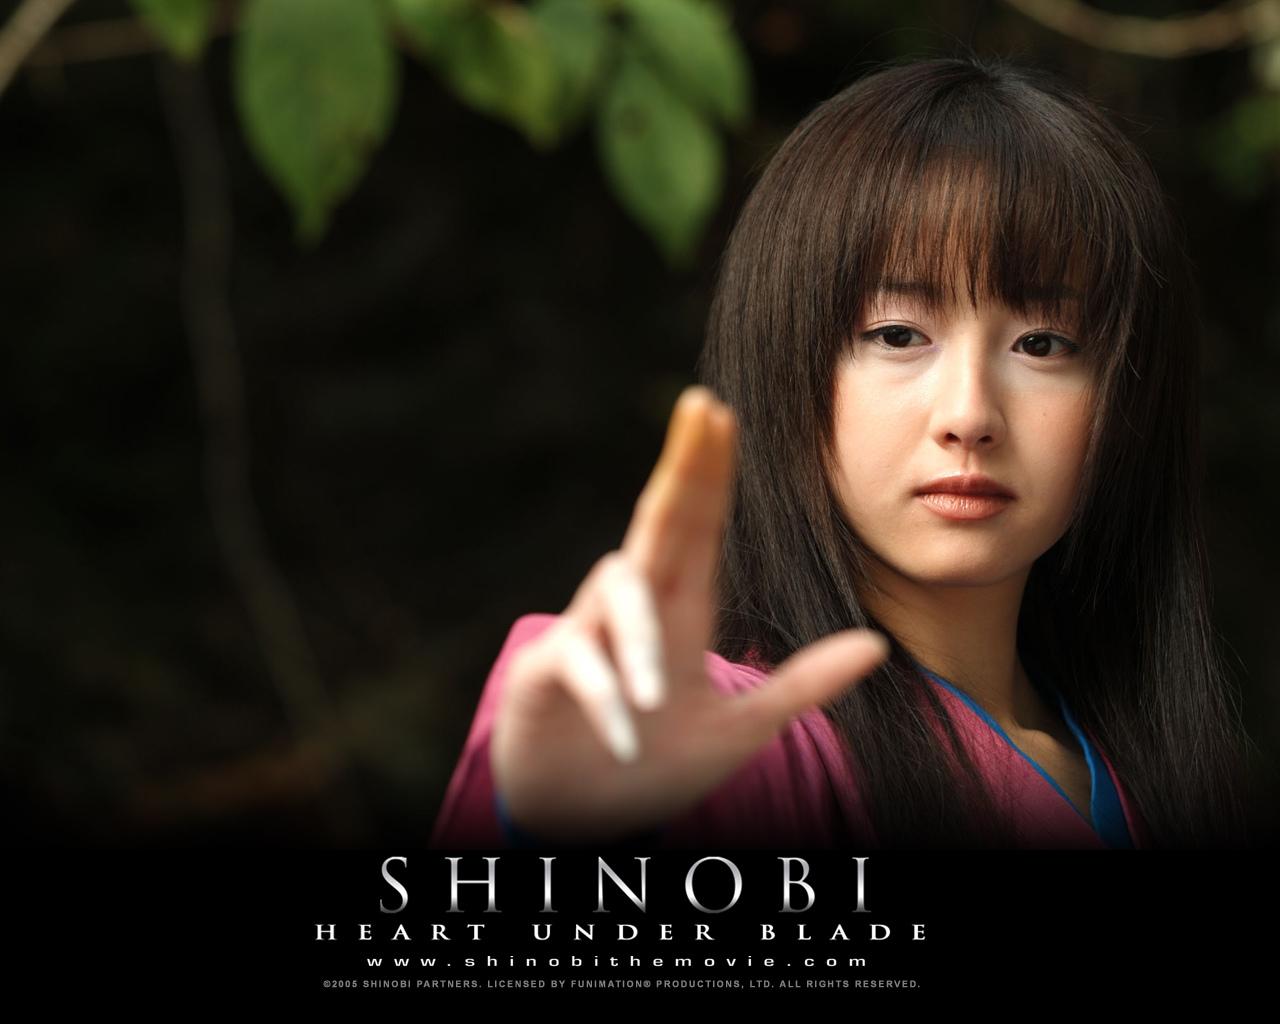 Shinobi Heart Under Blade at 1024 x 1024 iPad size wallpapers HD quality